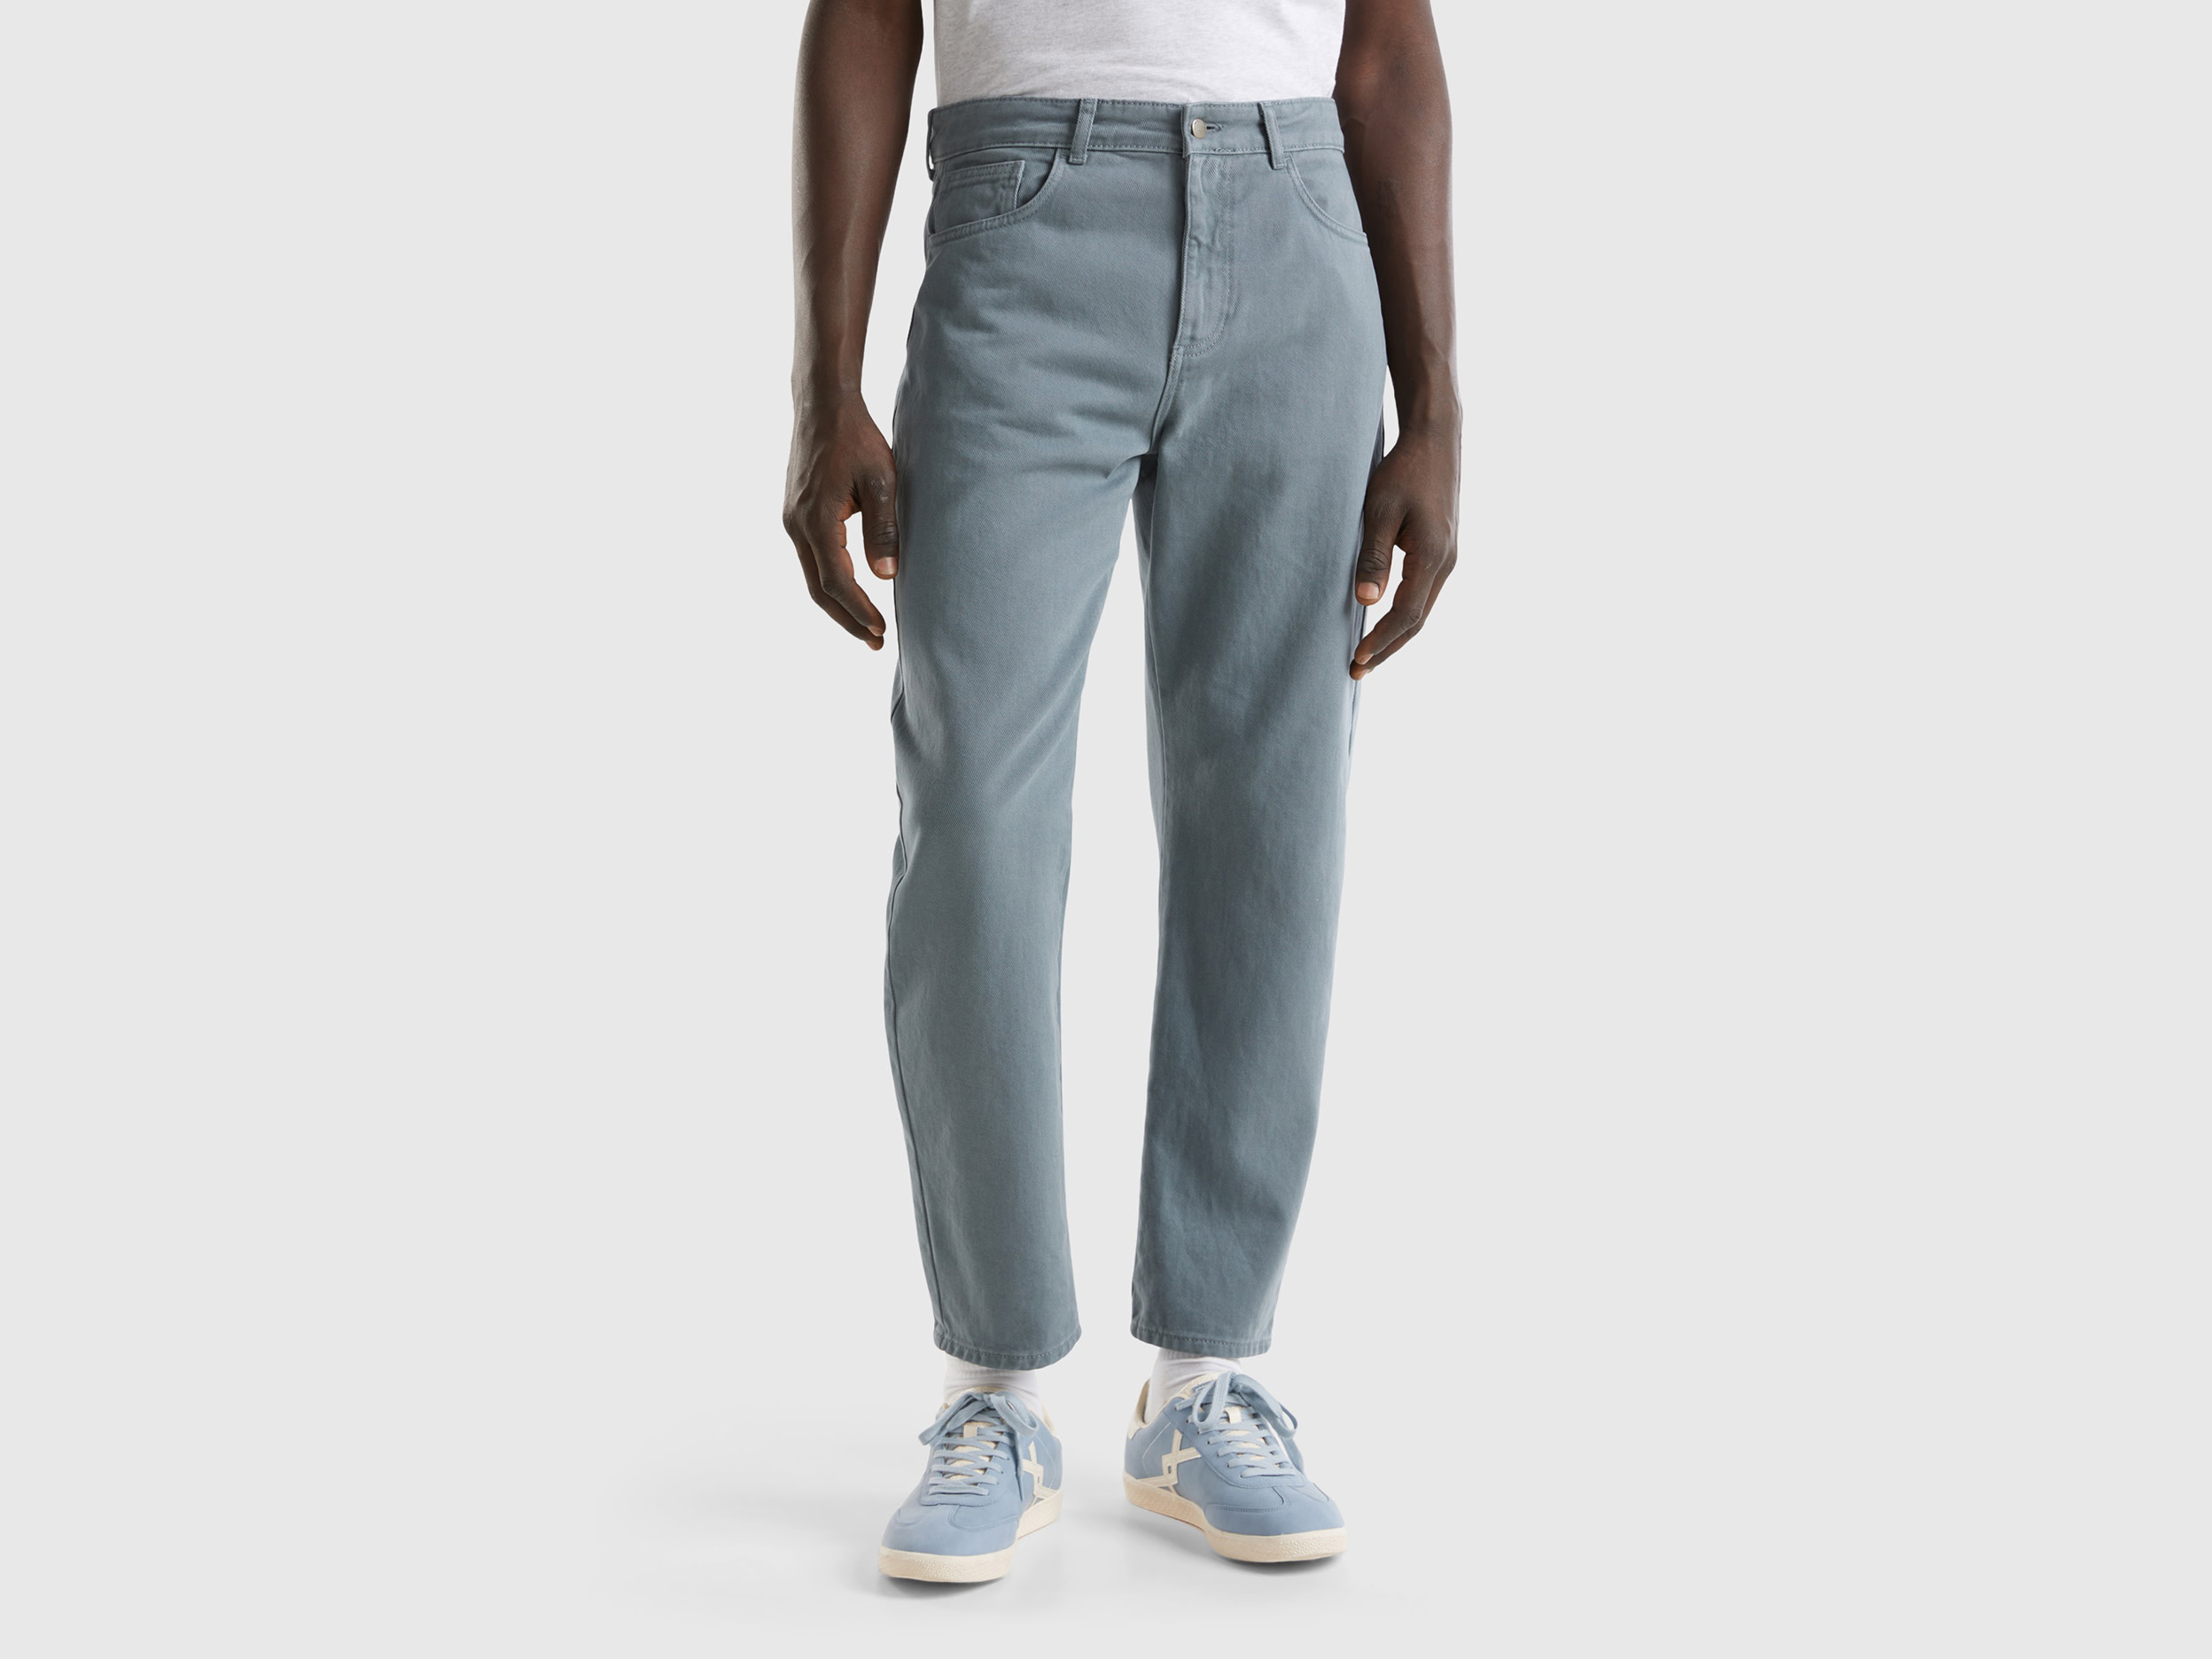 Benetton, Five Pocket Carrot Fit Trousers, size 29, Light Gray, Men